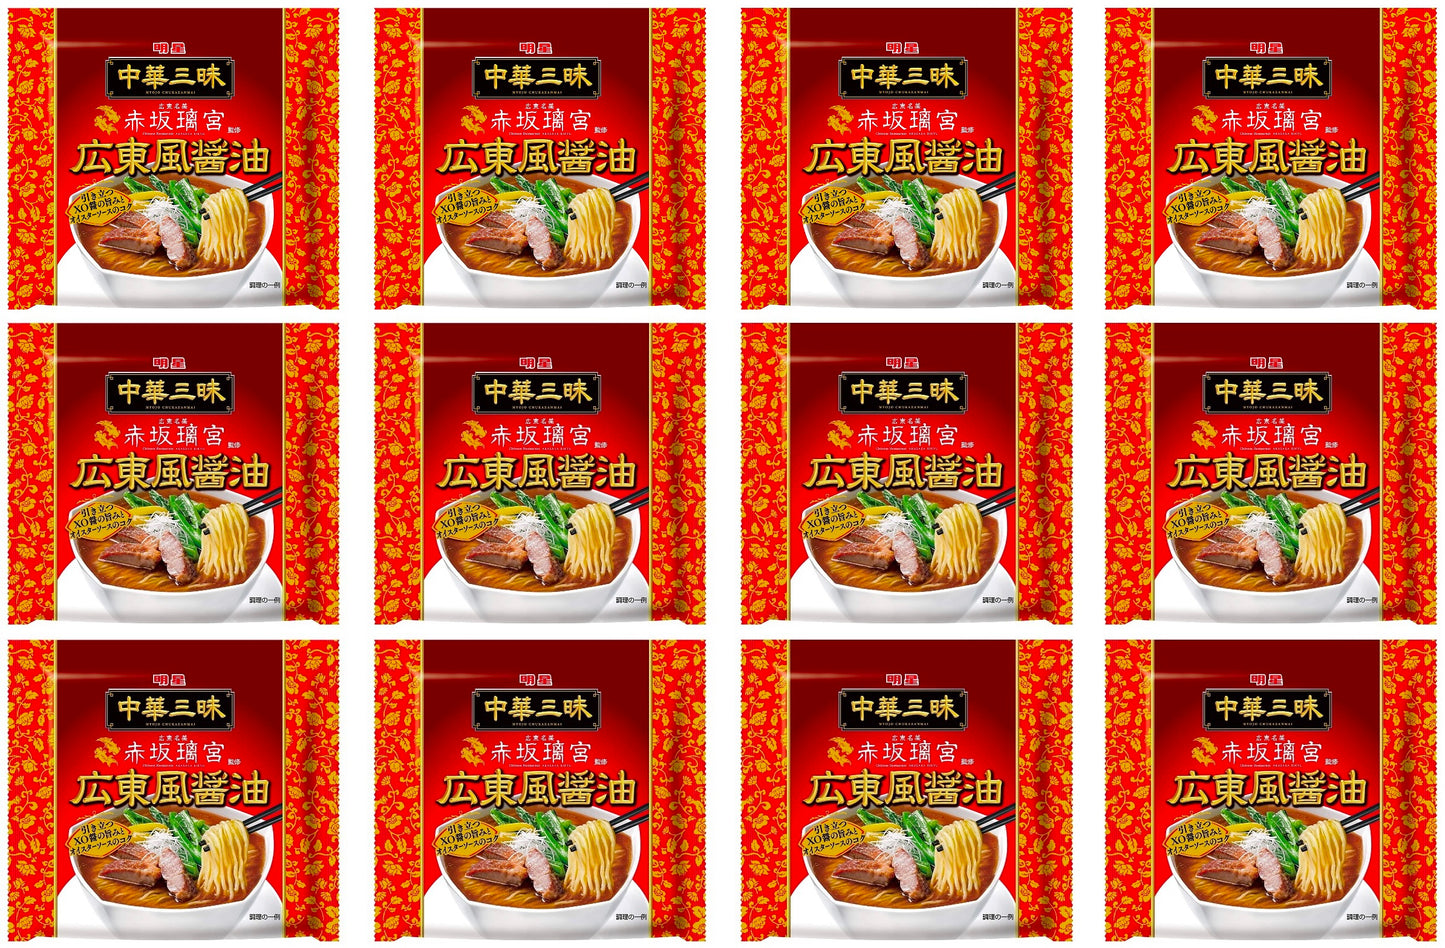 Japanese Ramen Noodles Chukazanmai Soy Sauce Guangdong Instant Food MYOJO 104g